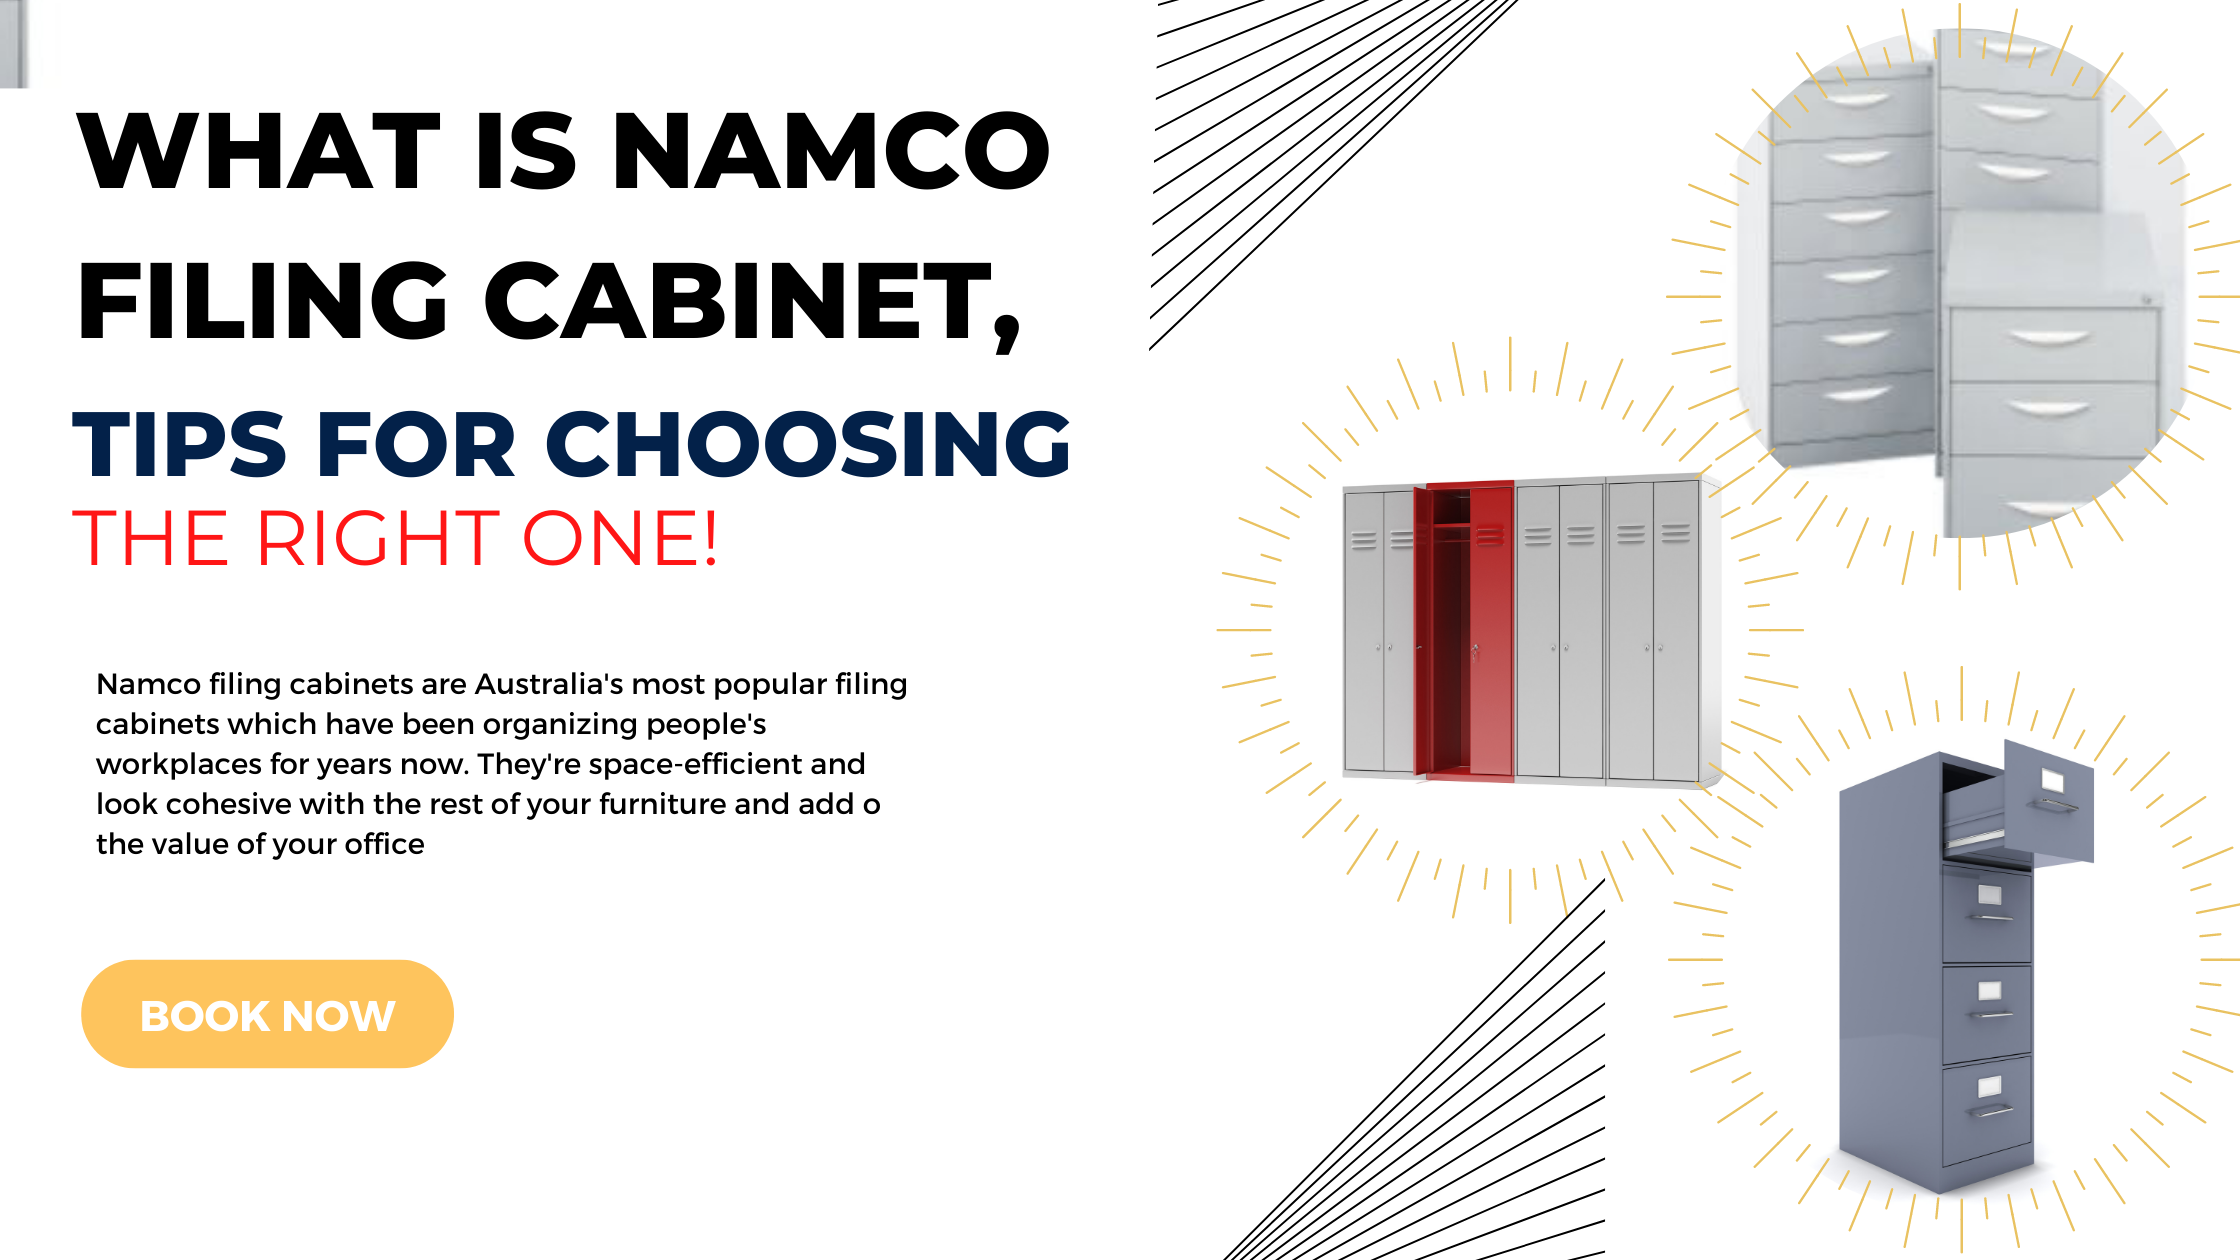 Namco filing cabinets